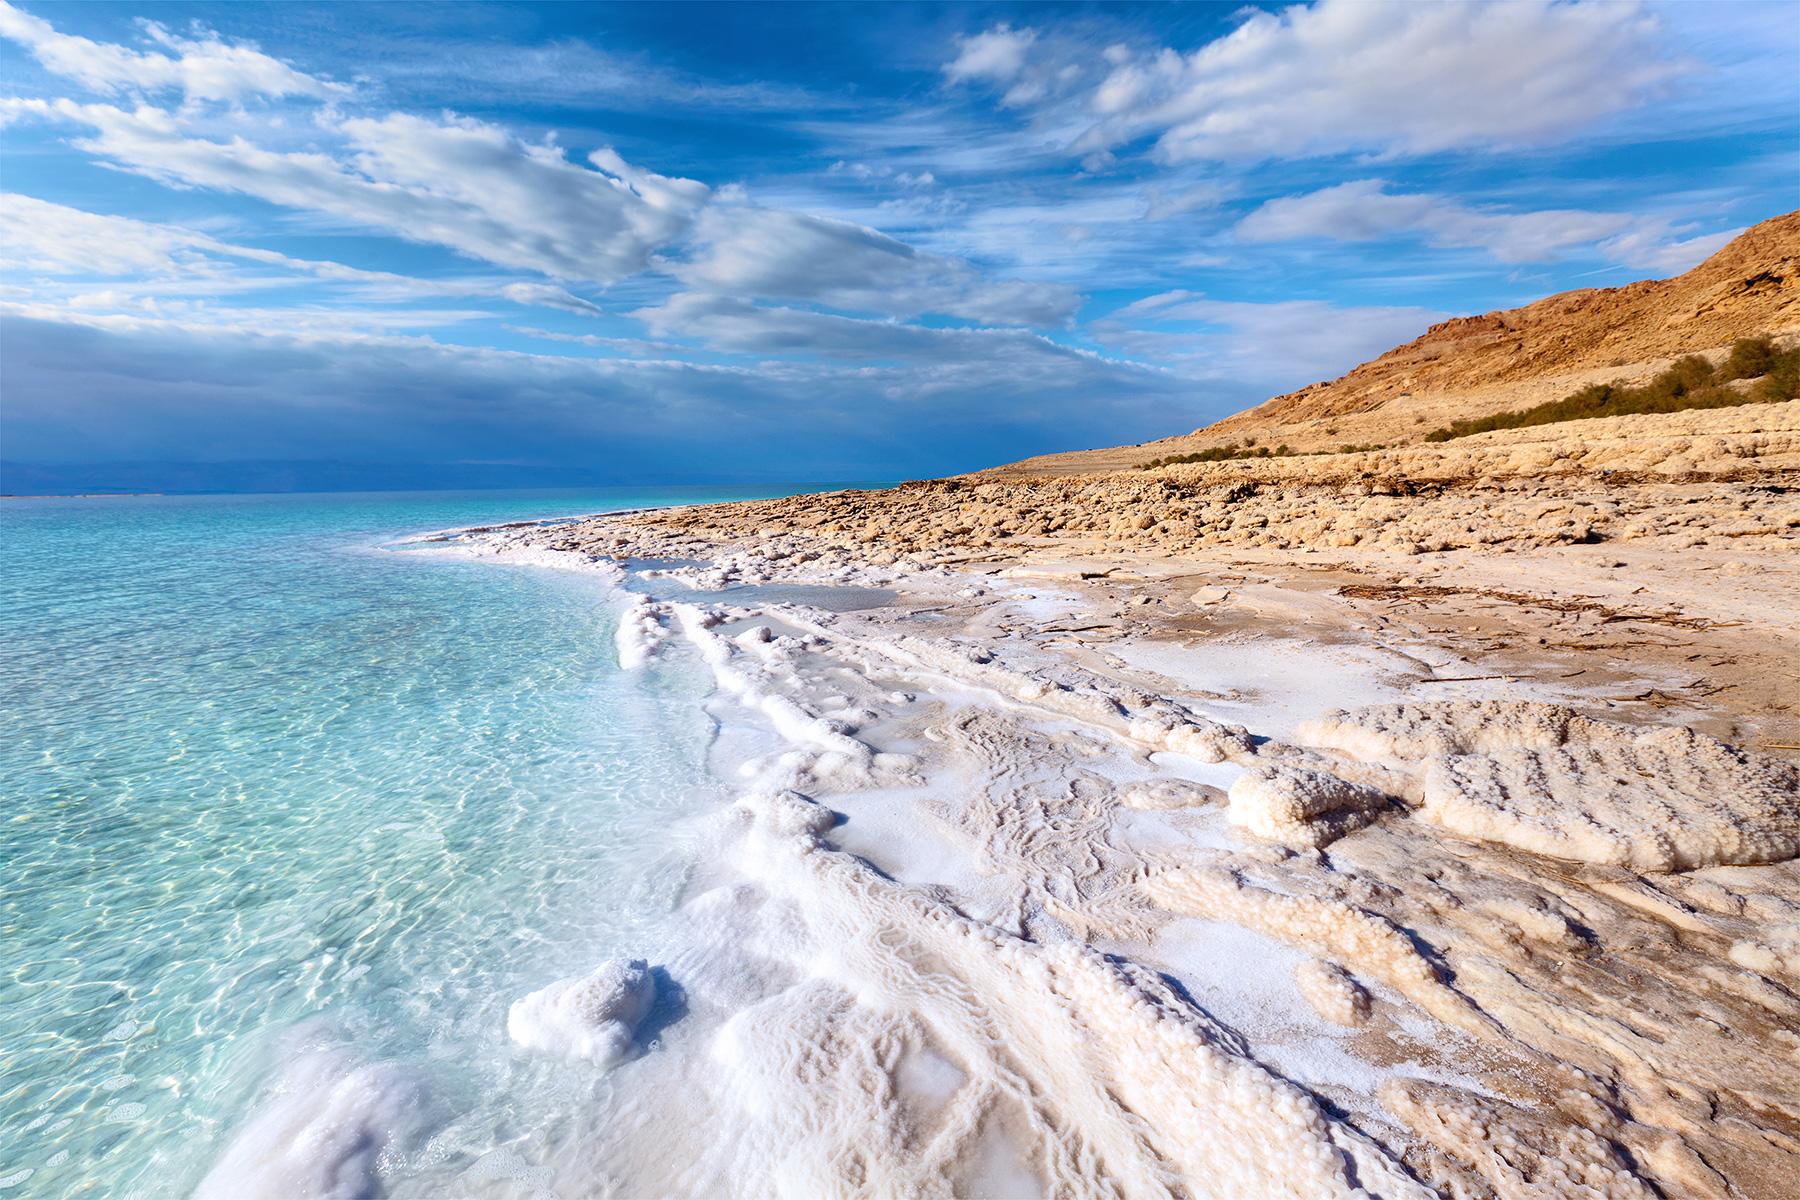 where is the dead sea located in jordan